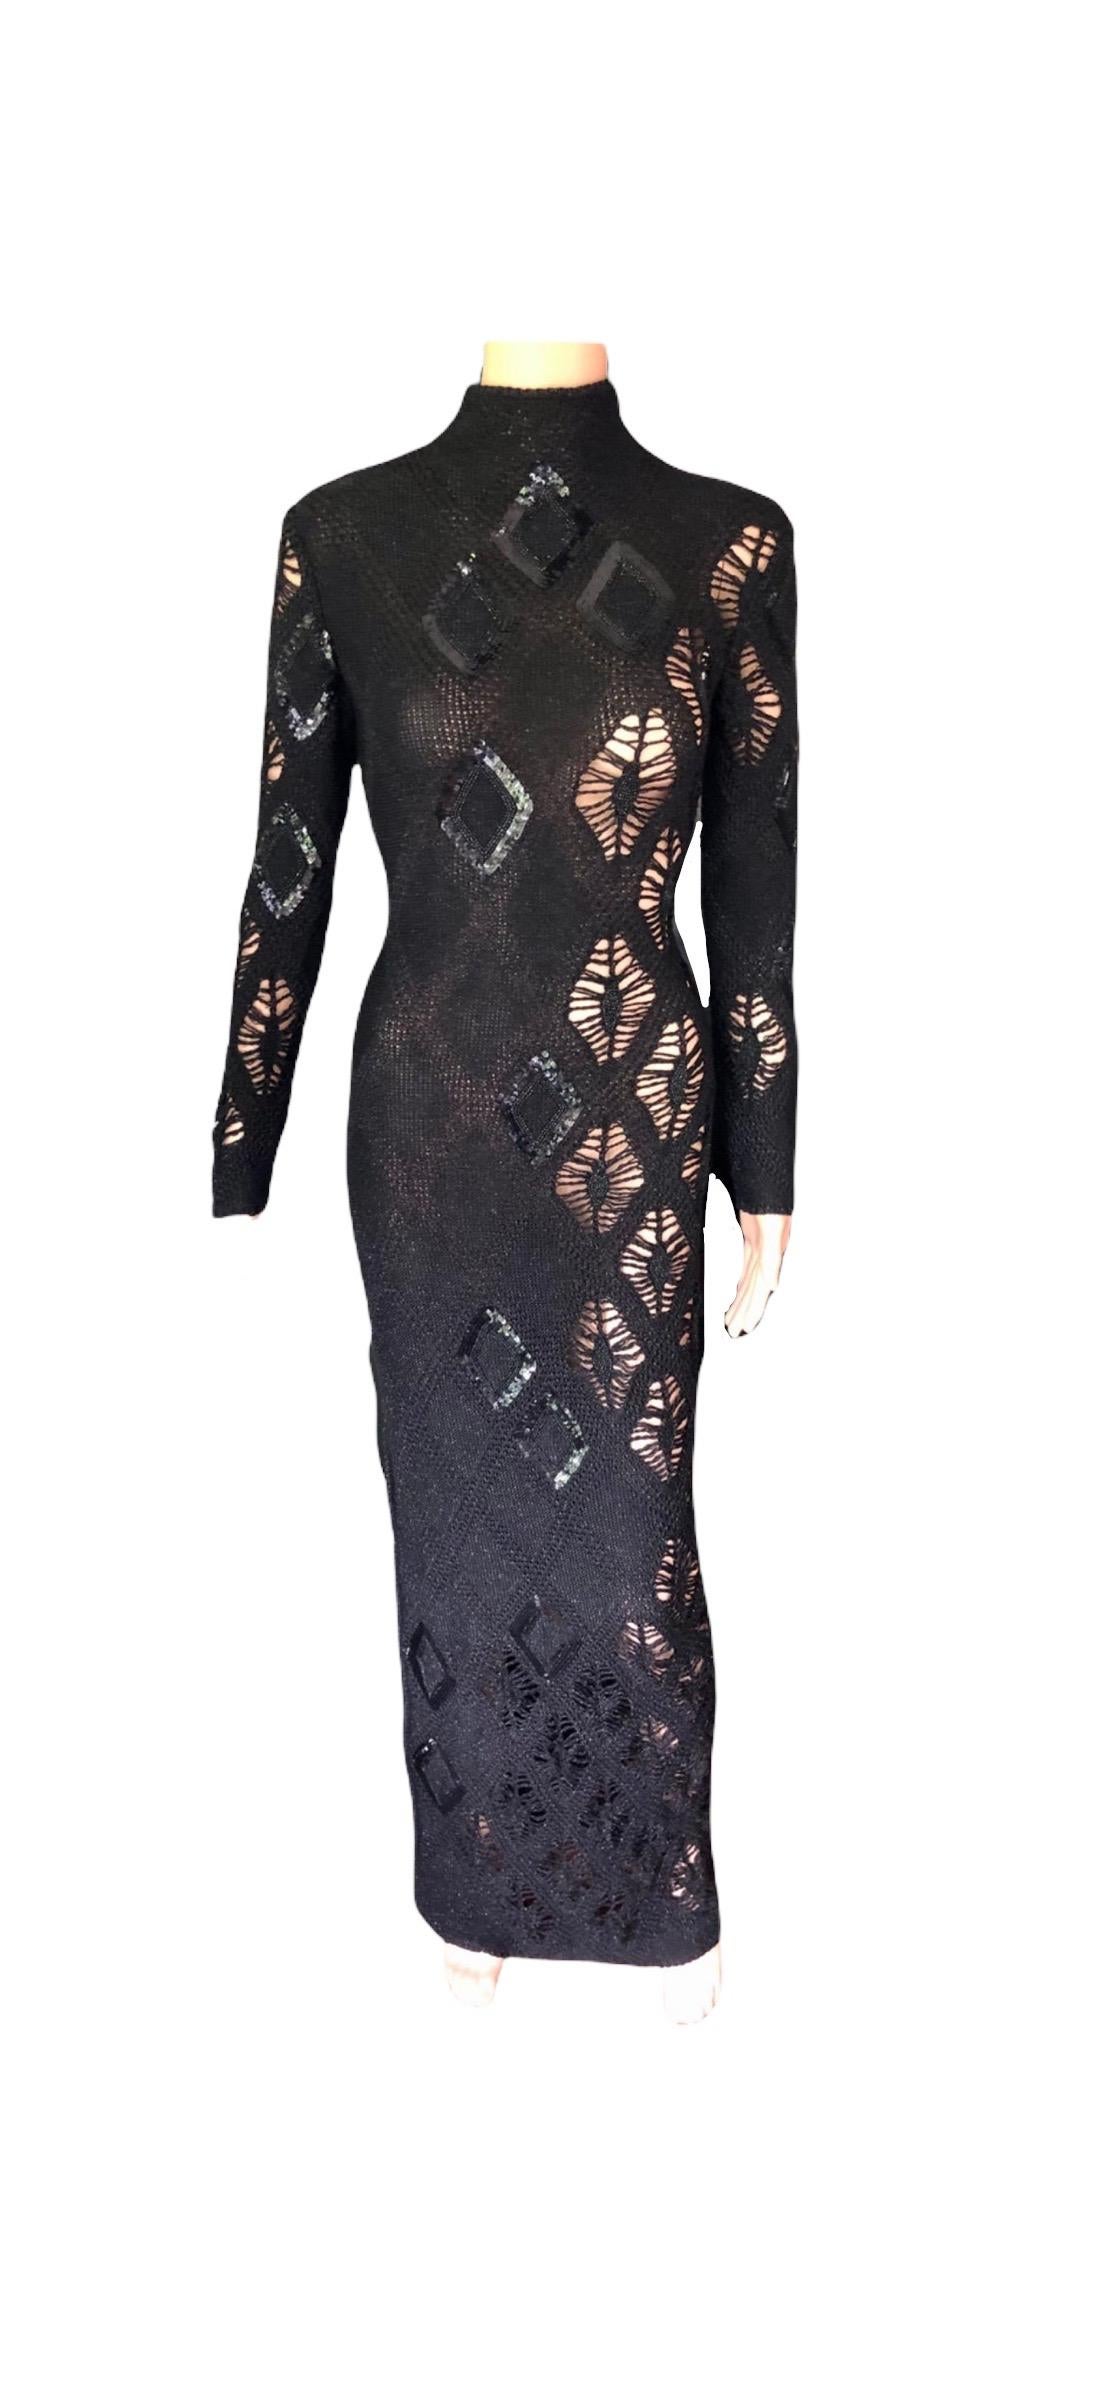 Gianfranco Ferre S/S 2002 Beaded Sequin Sheer Crochet Knit Black Maxi Dress Gown For Sale 7